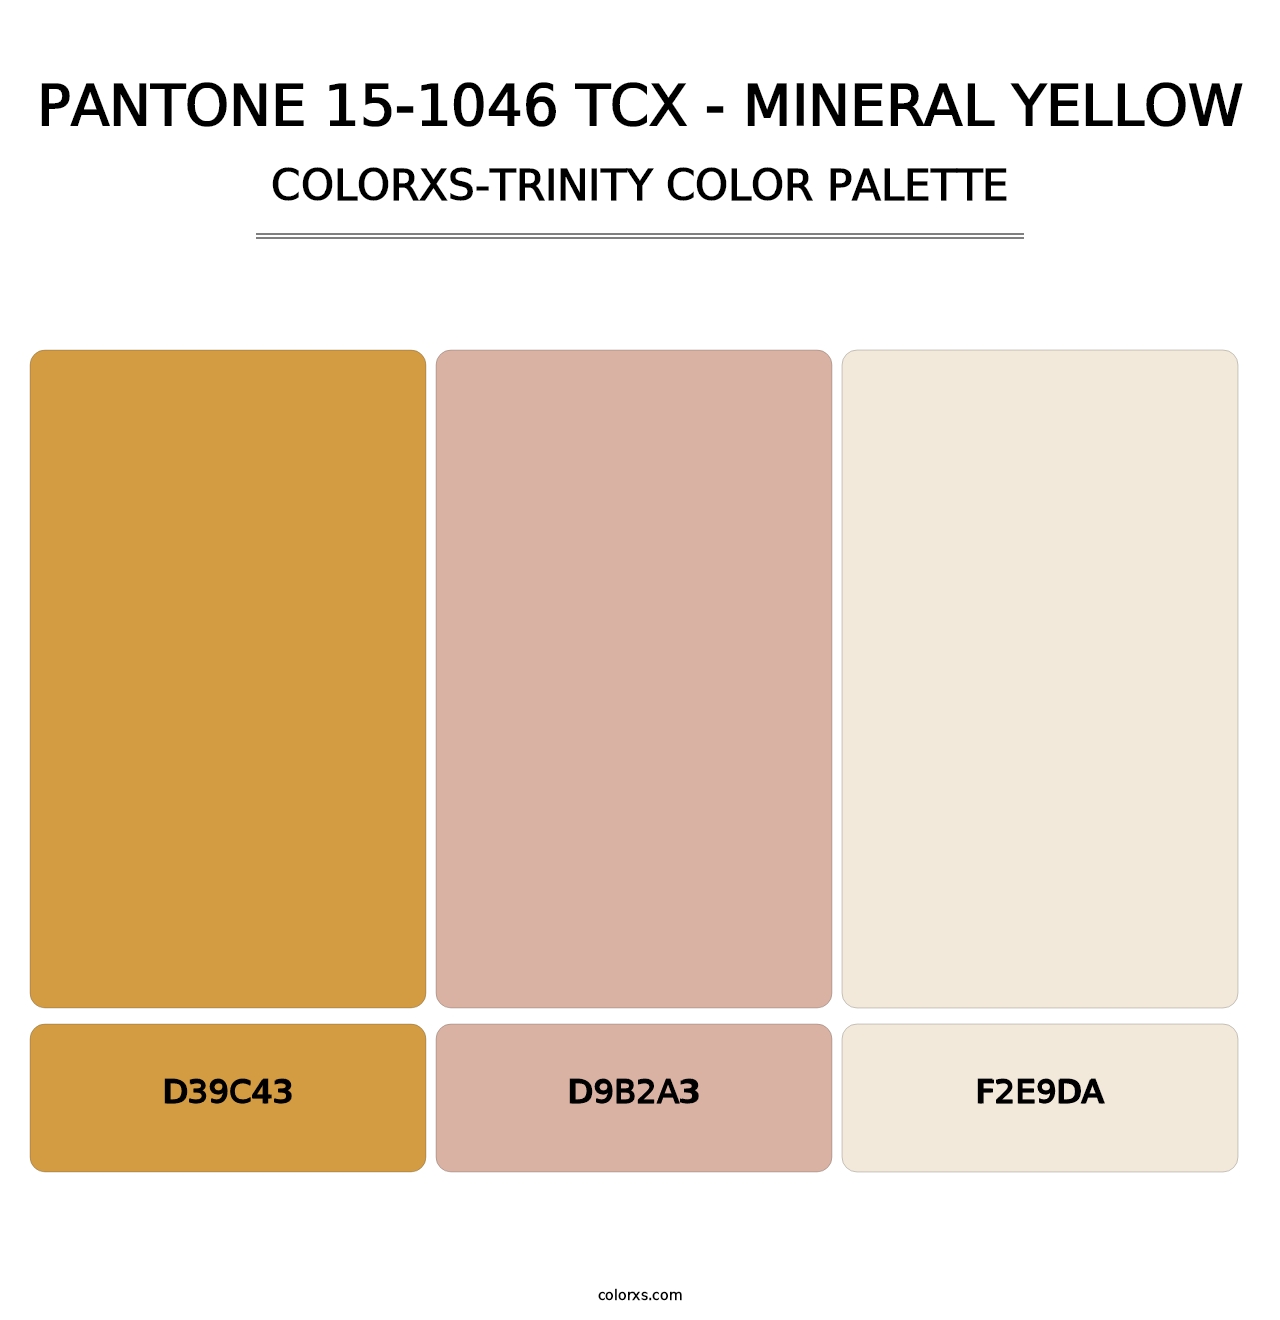 PANTONE 15-1046 TCX - Mineral Yellow - Colorxs Trinity Palette